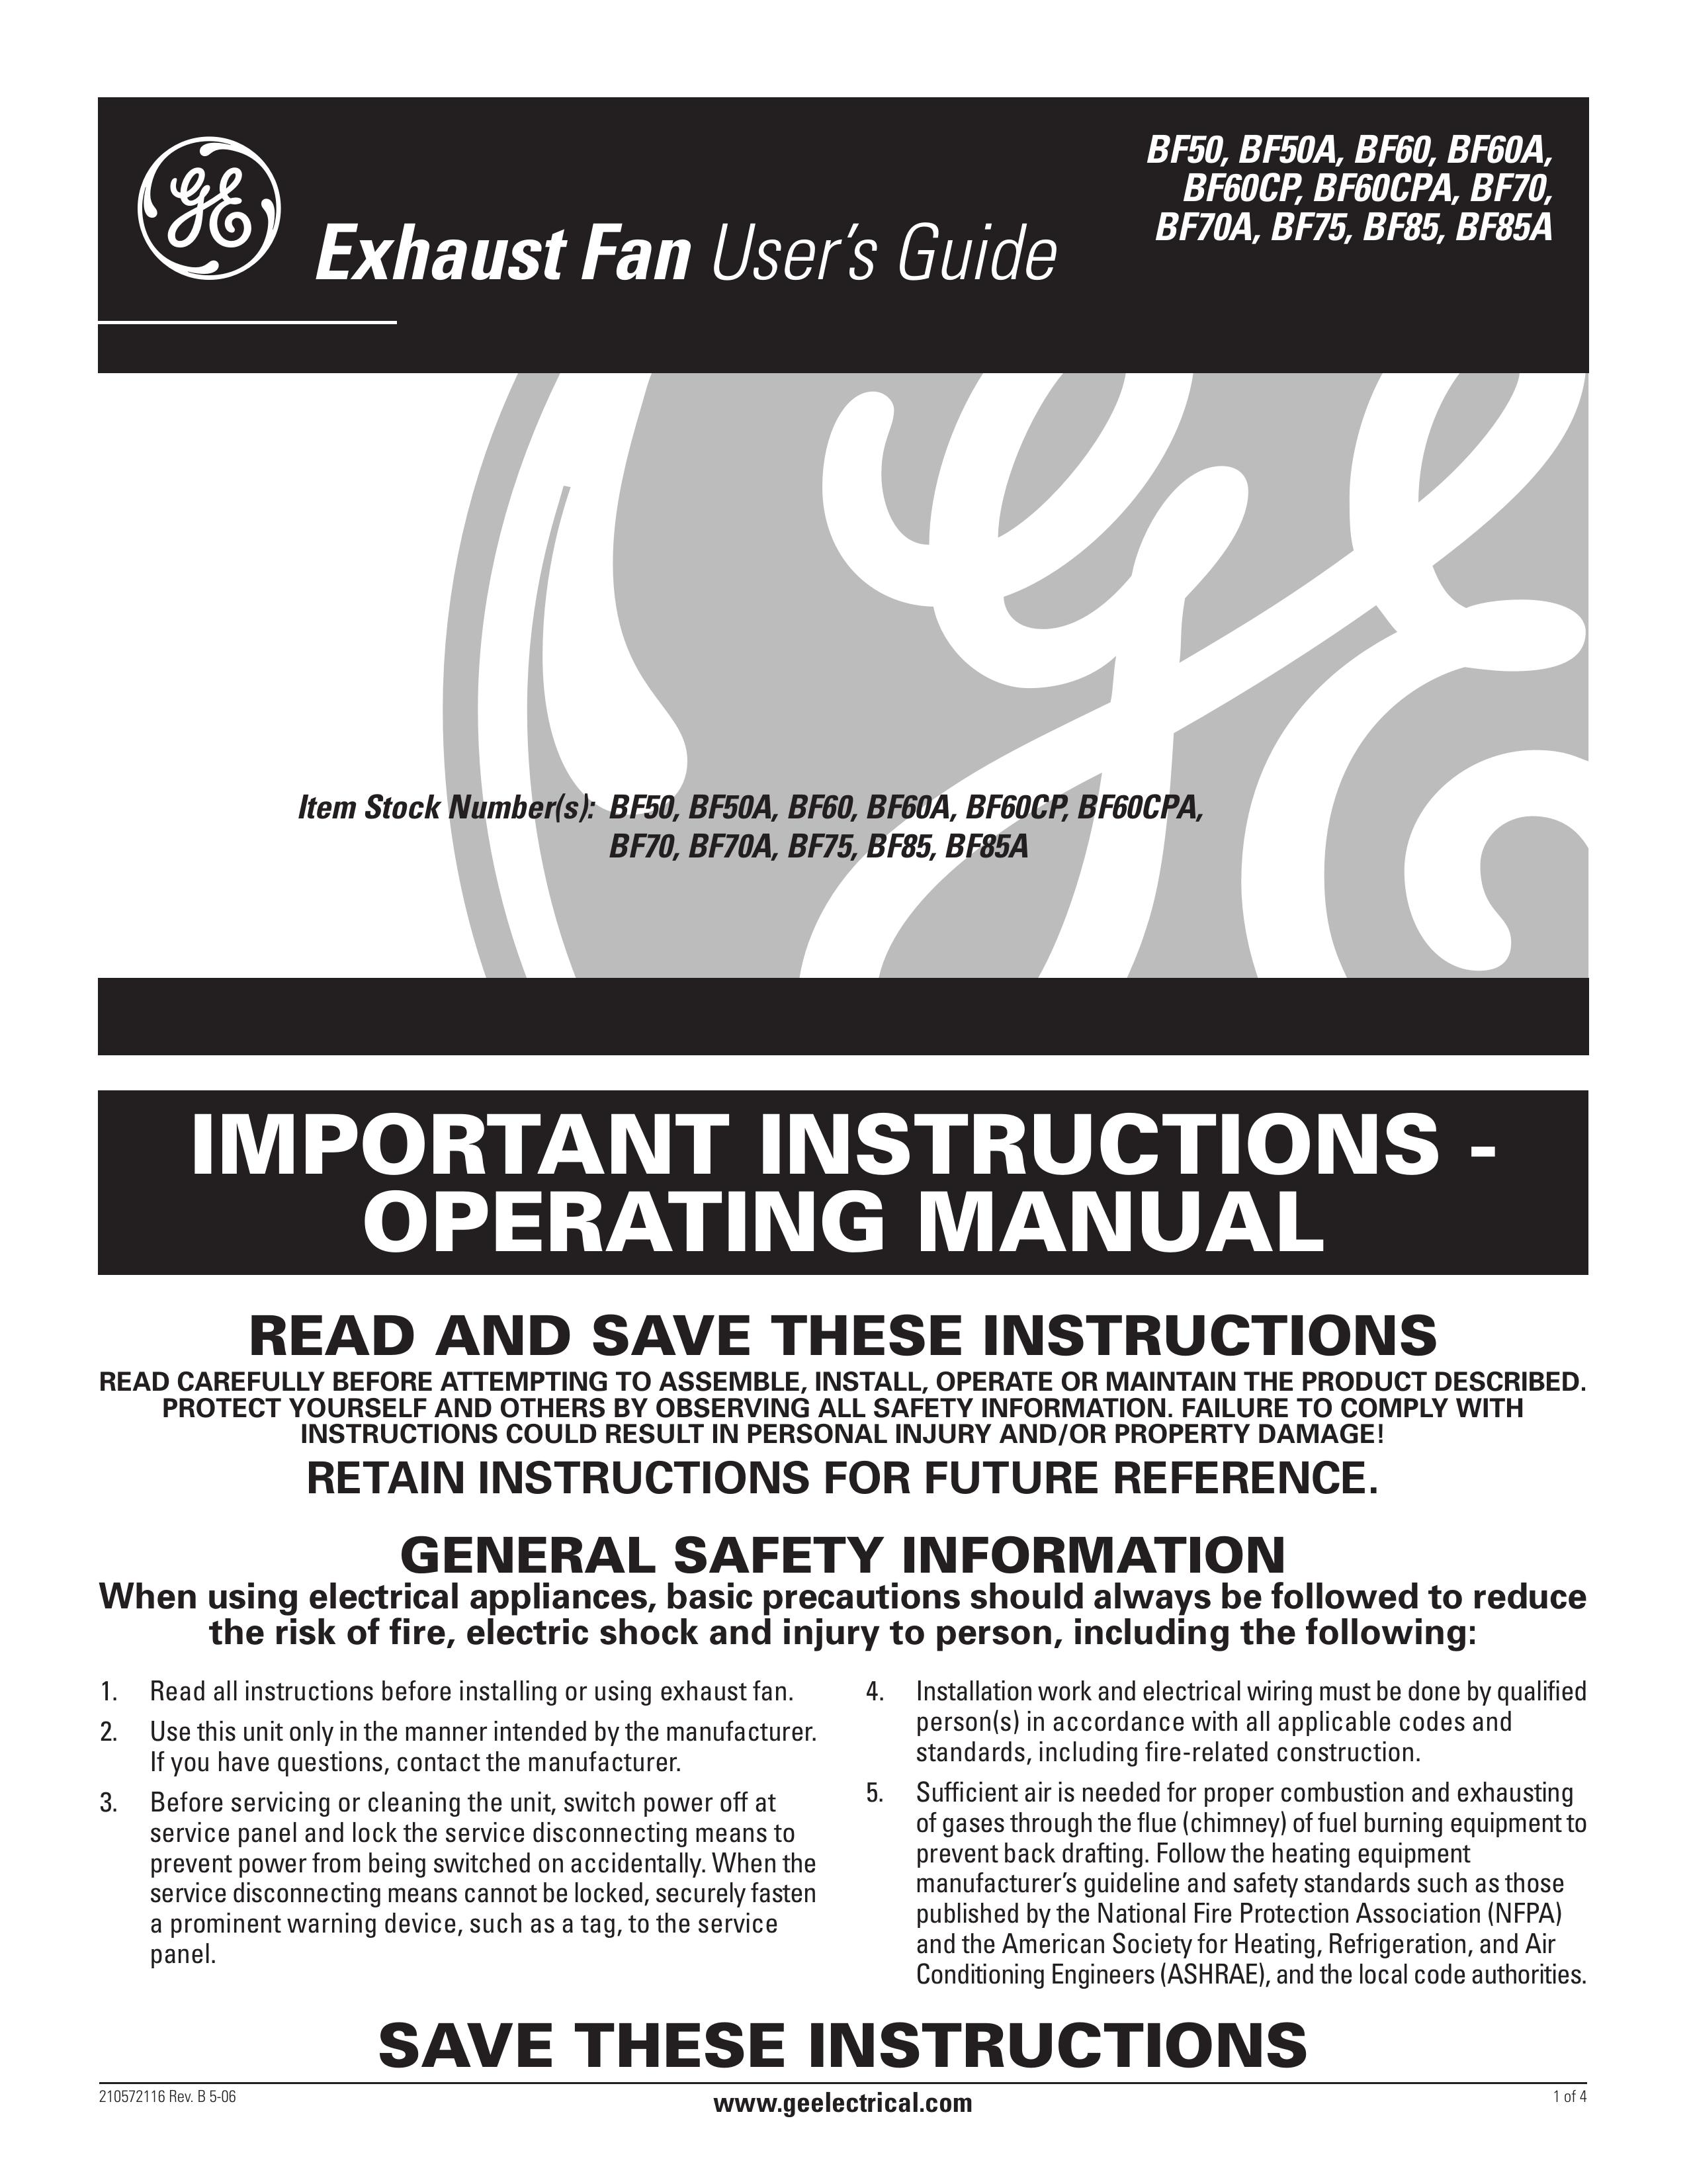 GE BF60A Ventilation Hood User Manual